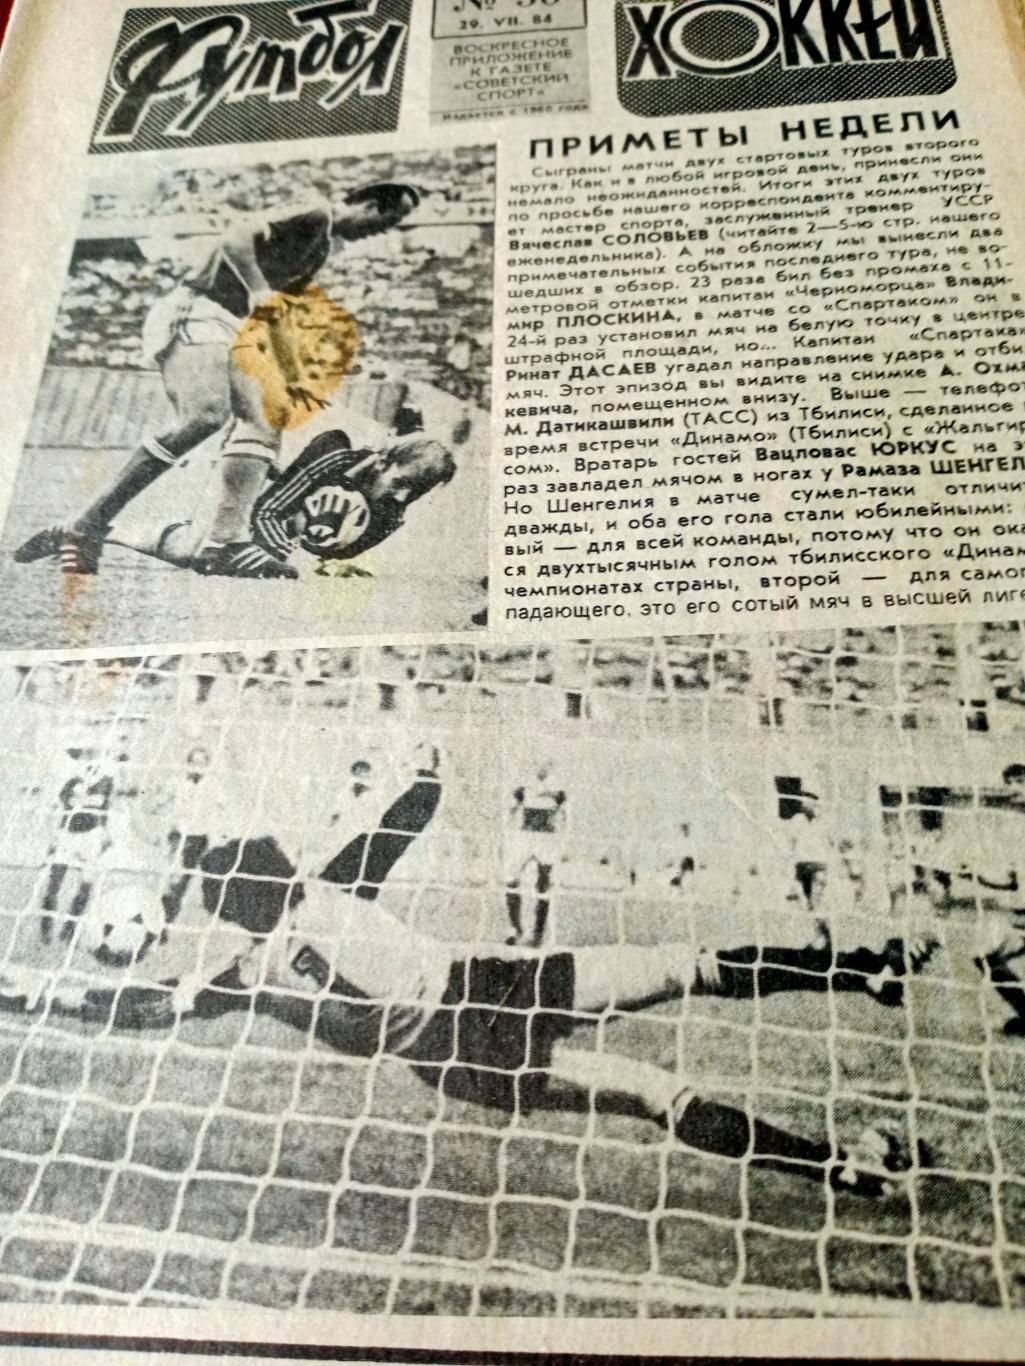 Футбол-Хоккей. 1984 год, №30